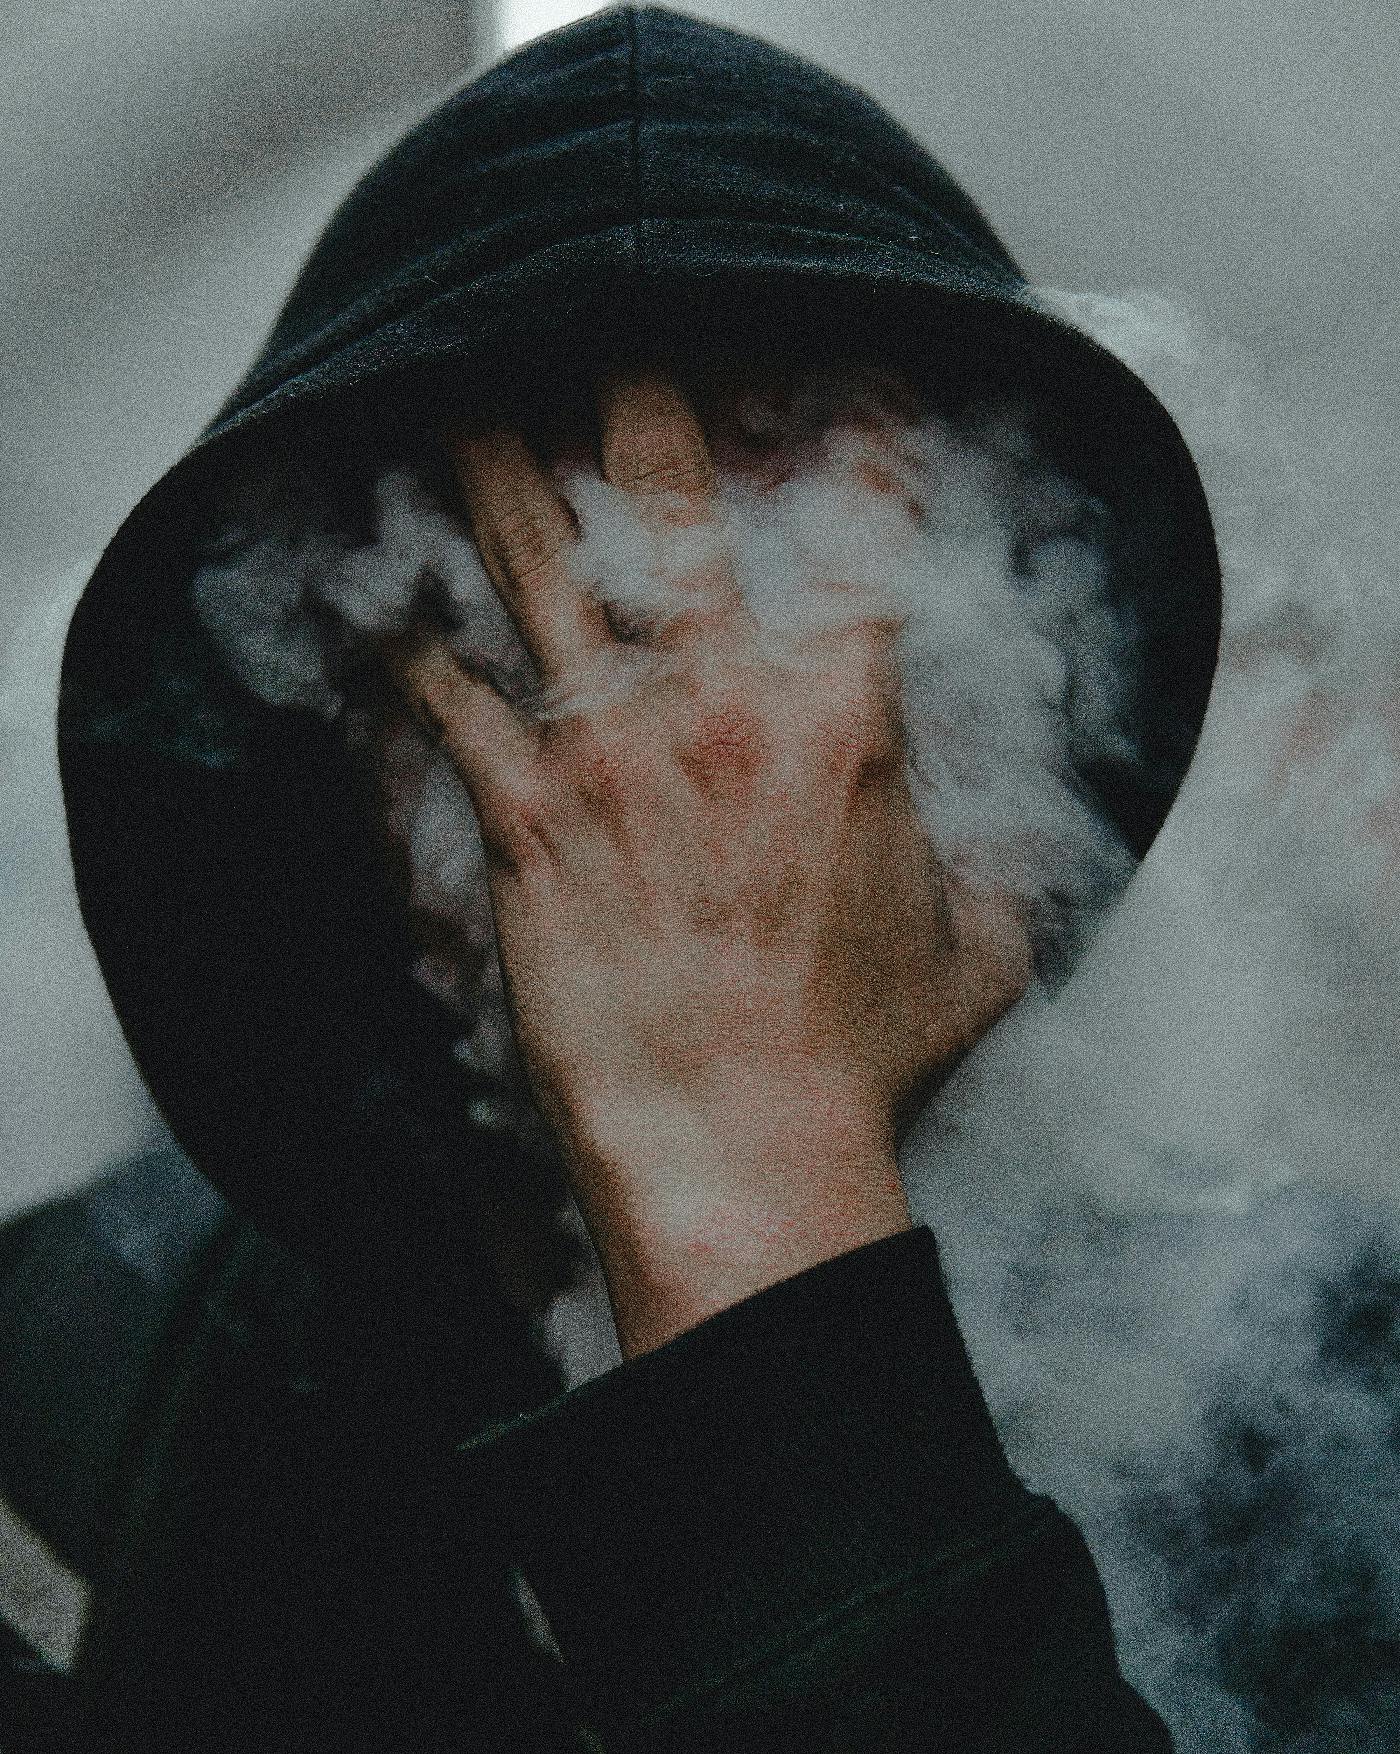 a man in a black hoody turning to smoke.